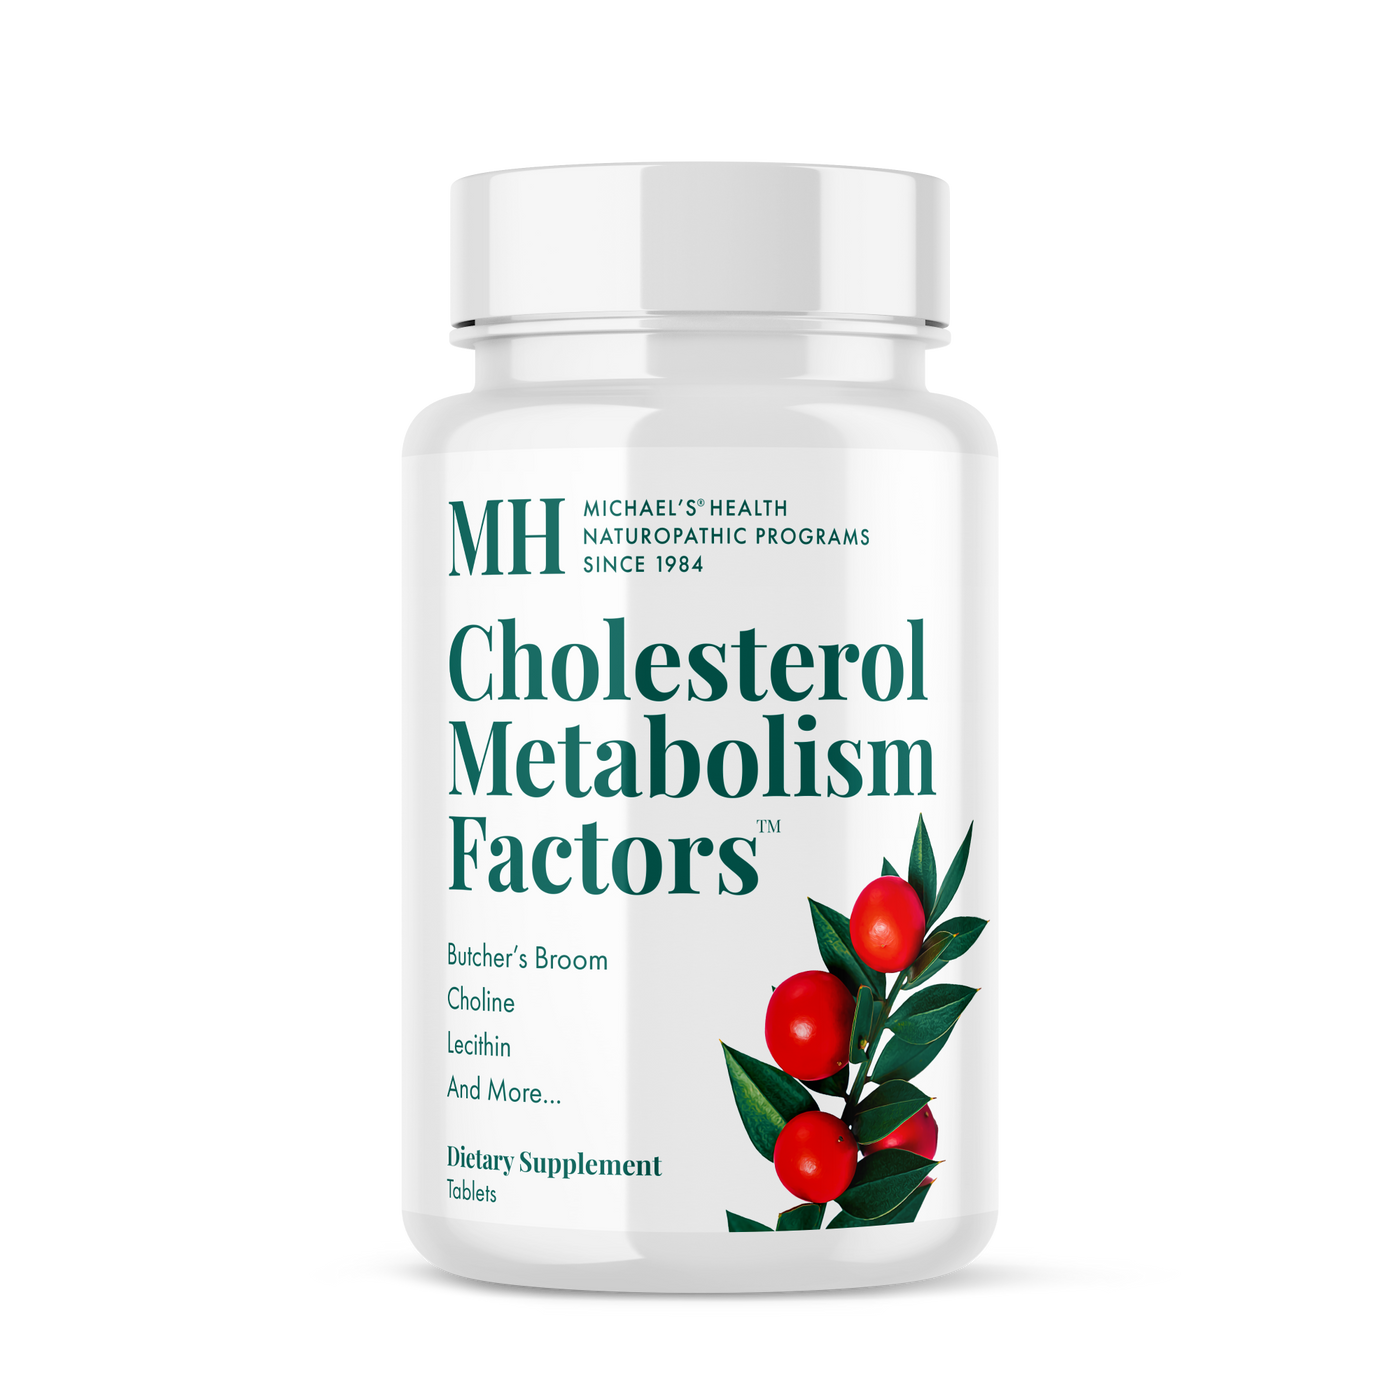 Cholesterol Metabolism Factors™